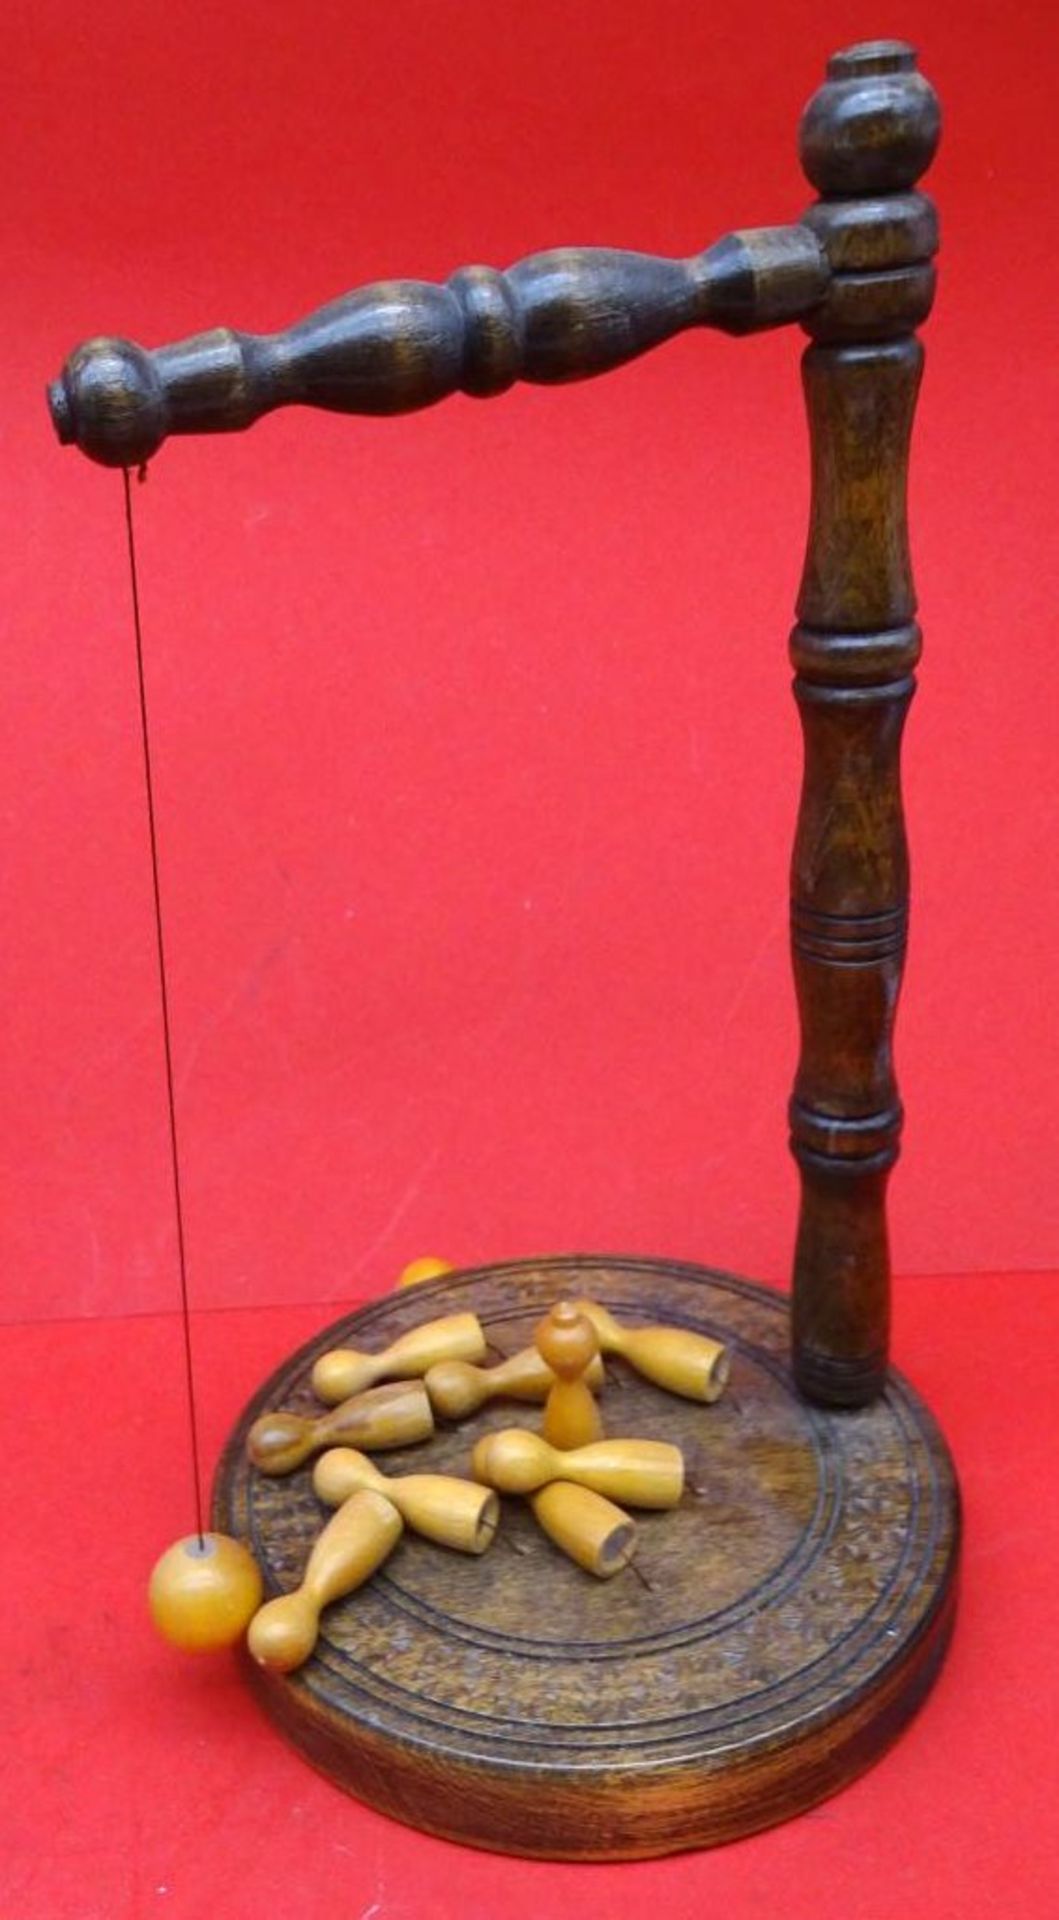 Tisch-Kegelspiel aus Holz, H-26 cm - Image 2 of 3